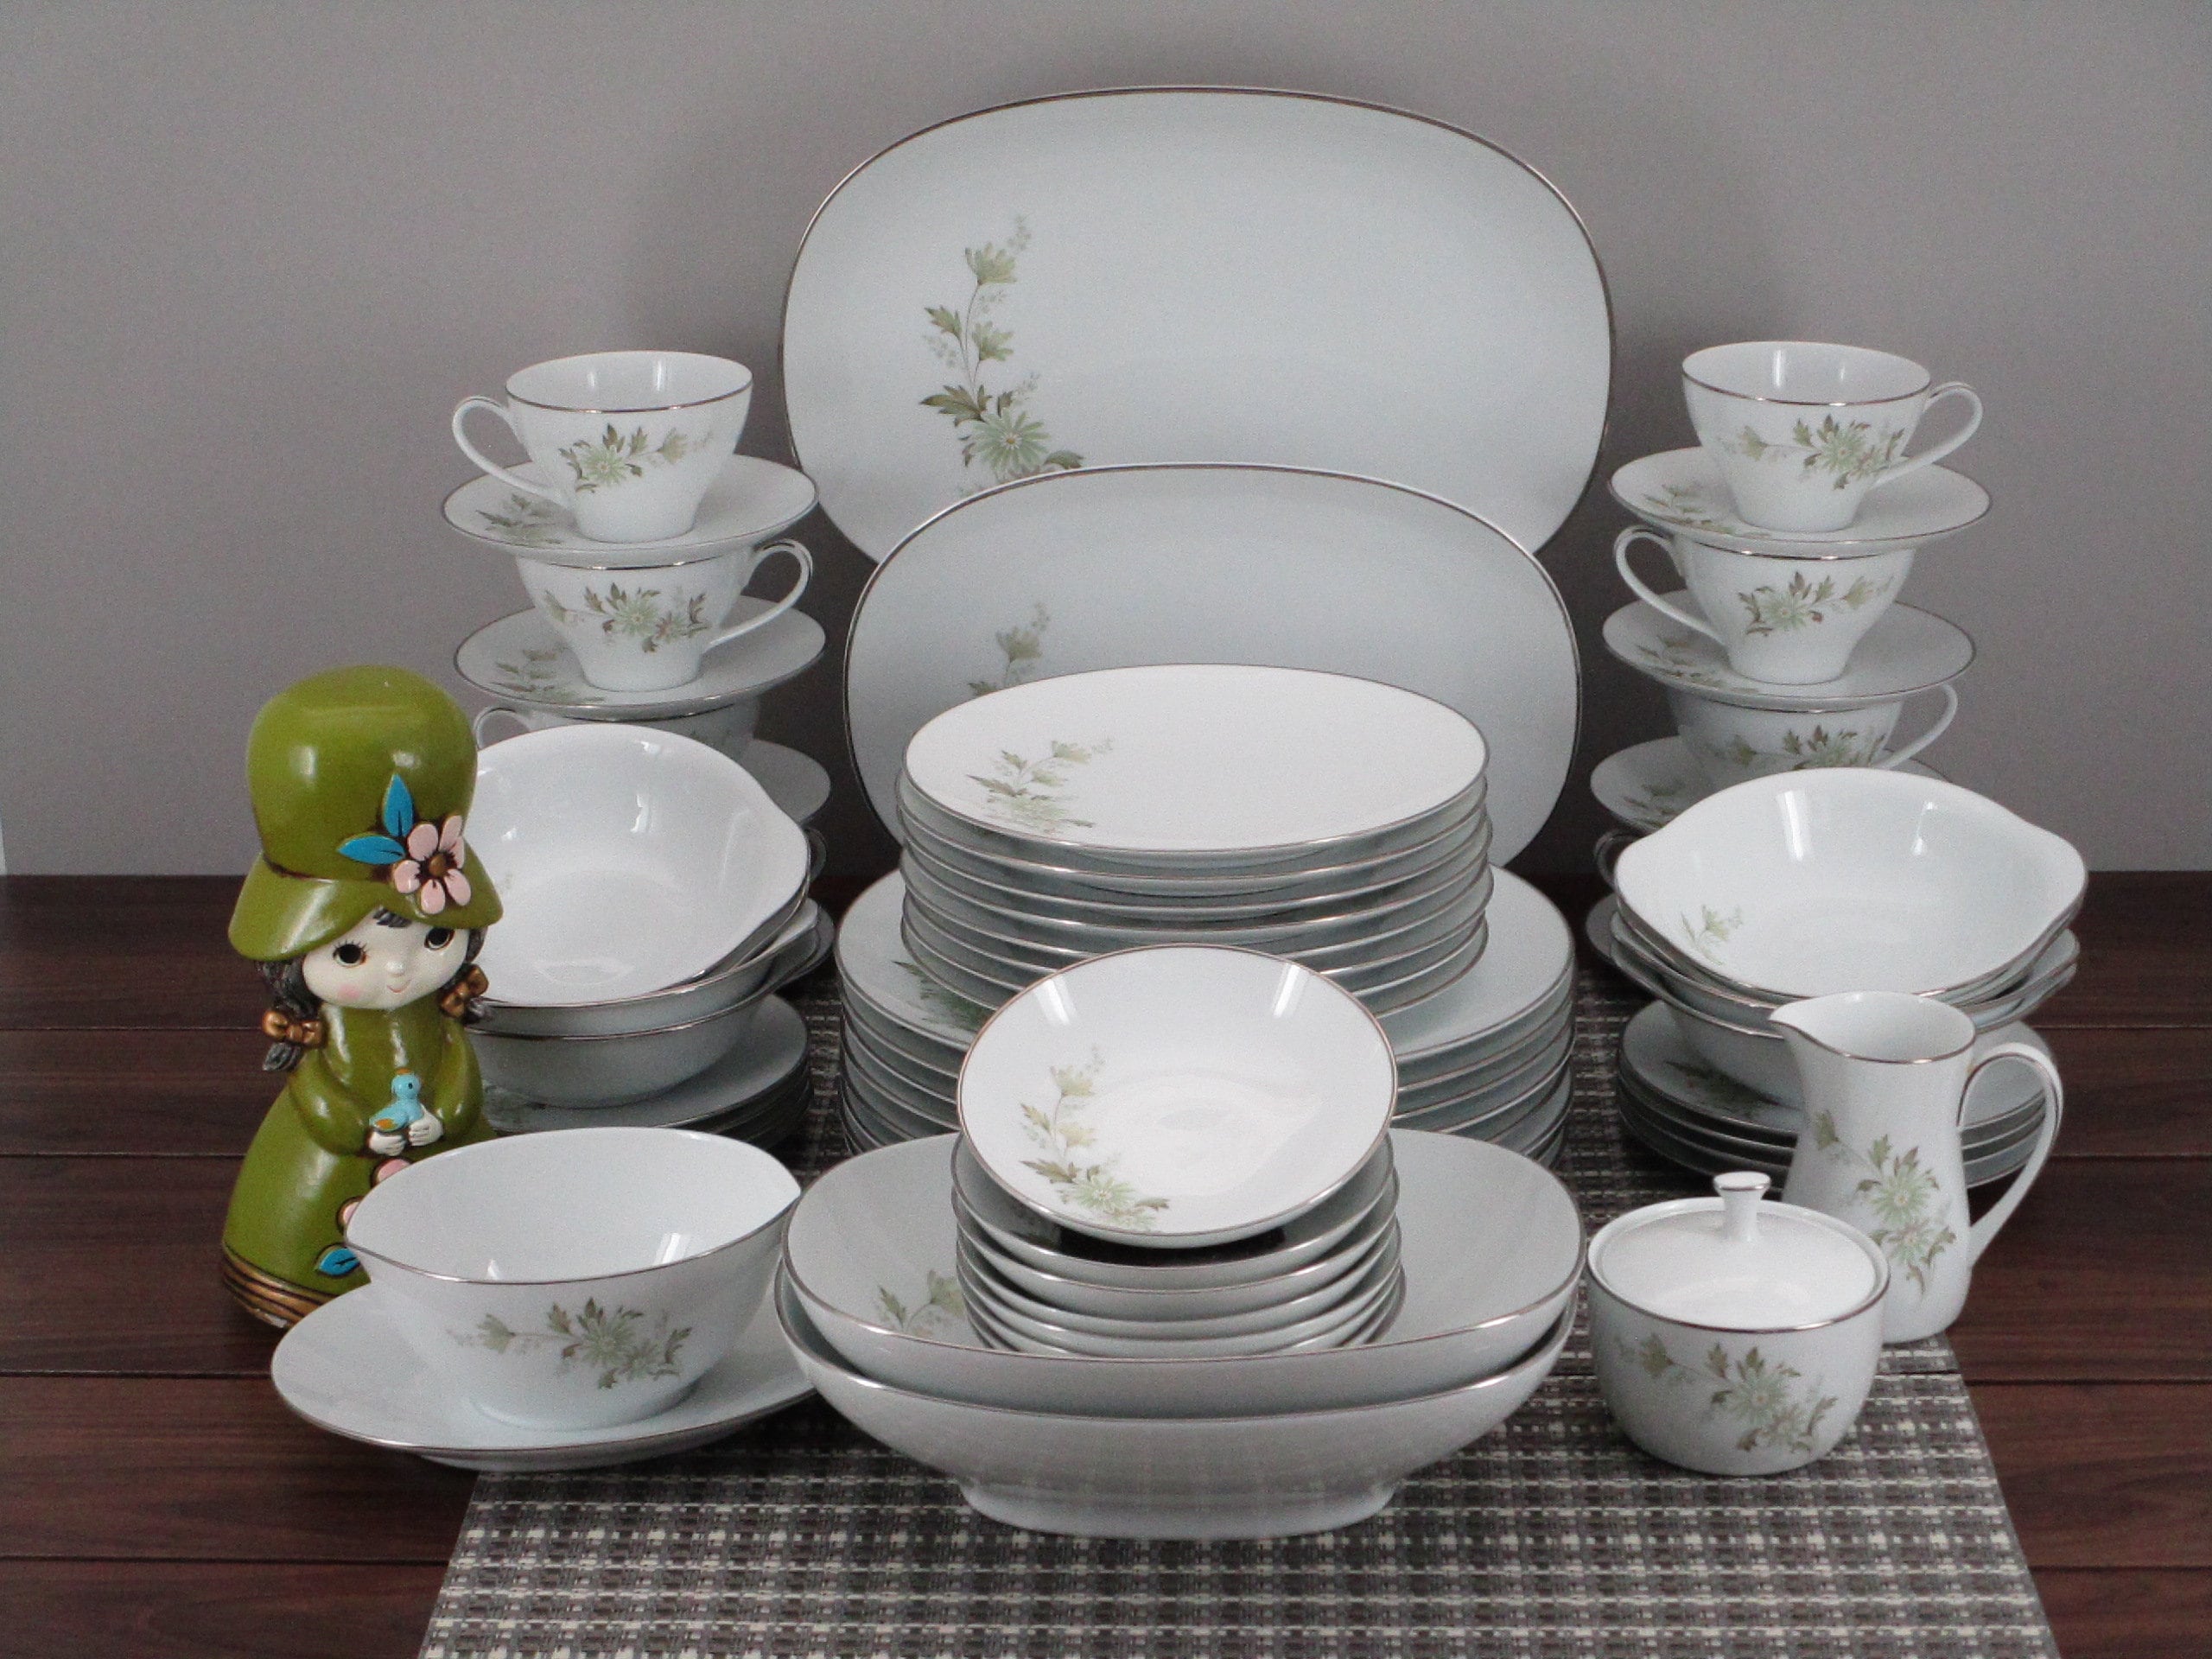 Noritake India - Buy Ceramic Dinner Sets, Crockery Set, Tableware